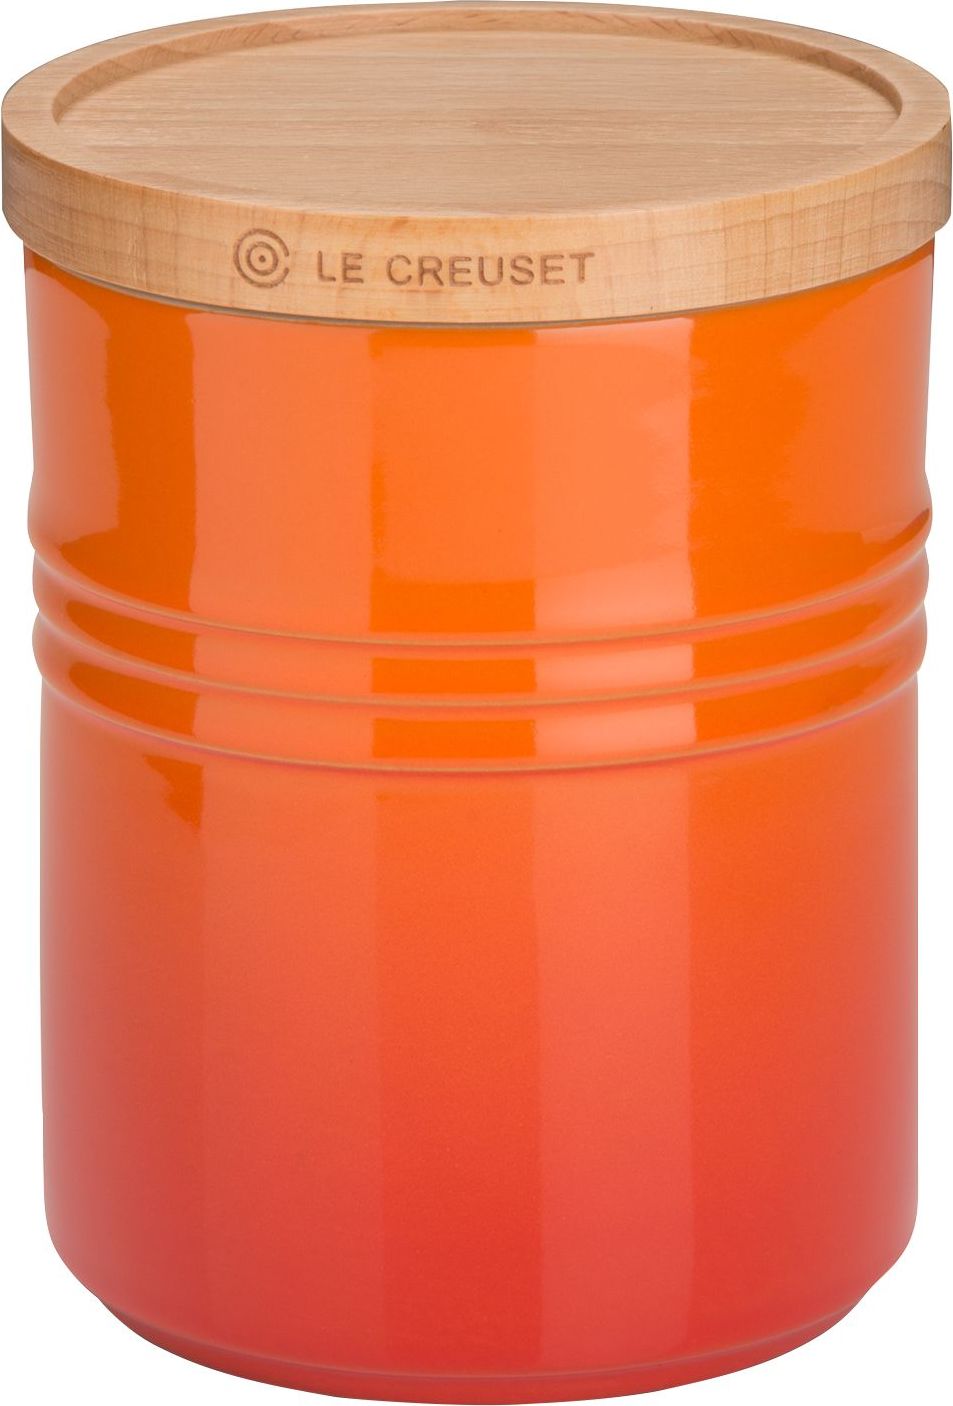 Le Creuset Kitchen container 540 ml - 91044401060099